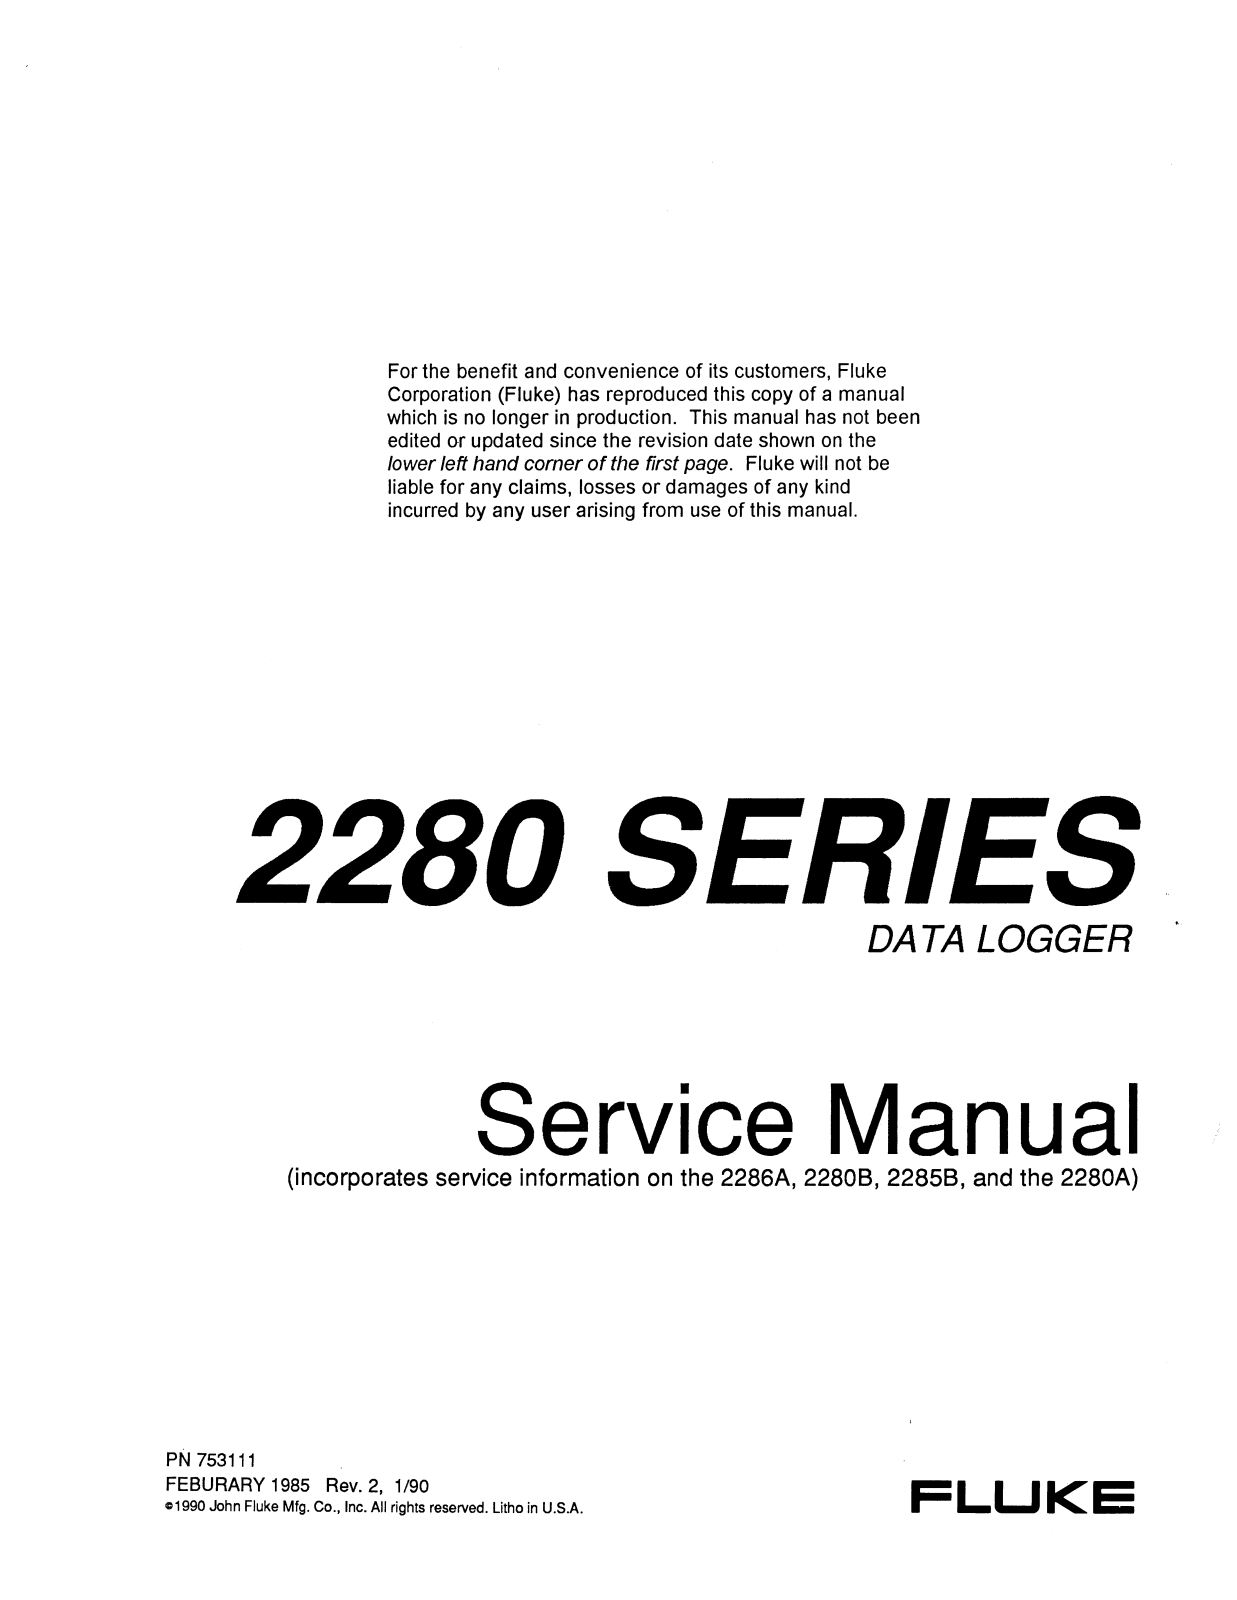 Fluke 2280A, 2285B, 2280B, 2280, 2286A Service Manual